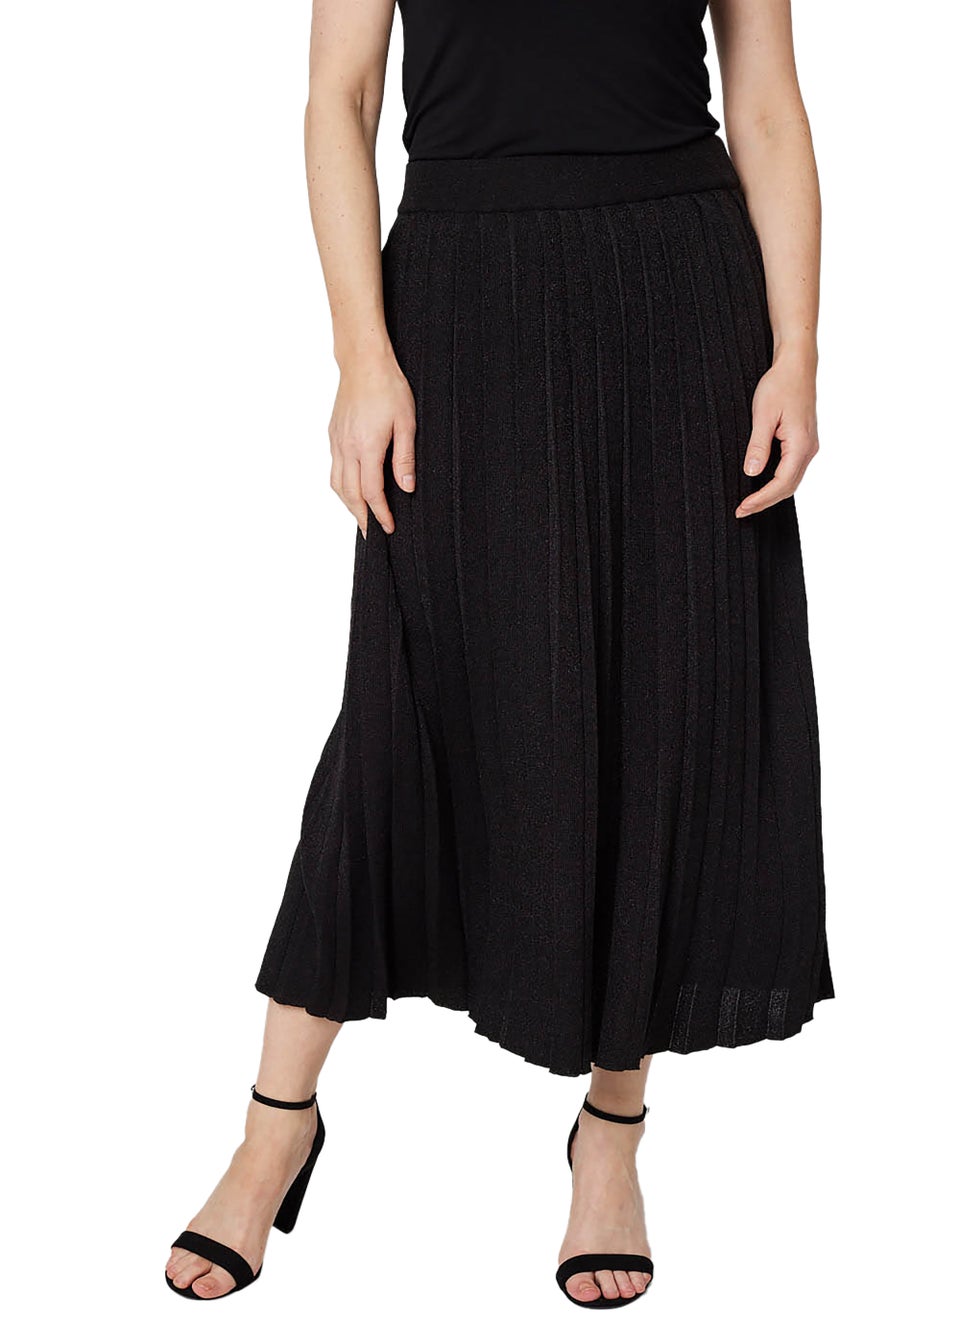 Izabel London Black High Waist Pleated Knit Skirt